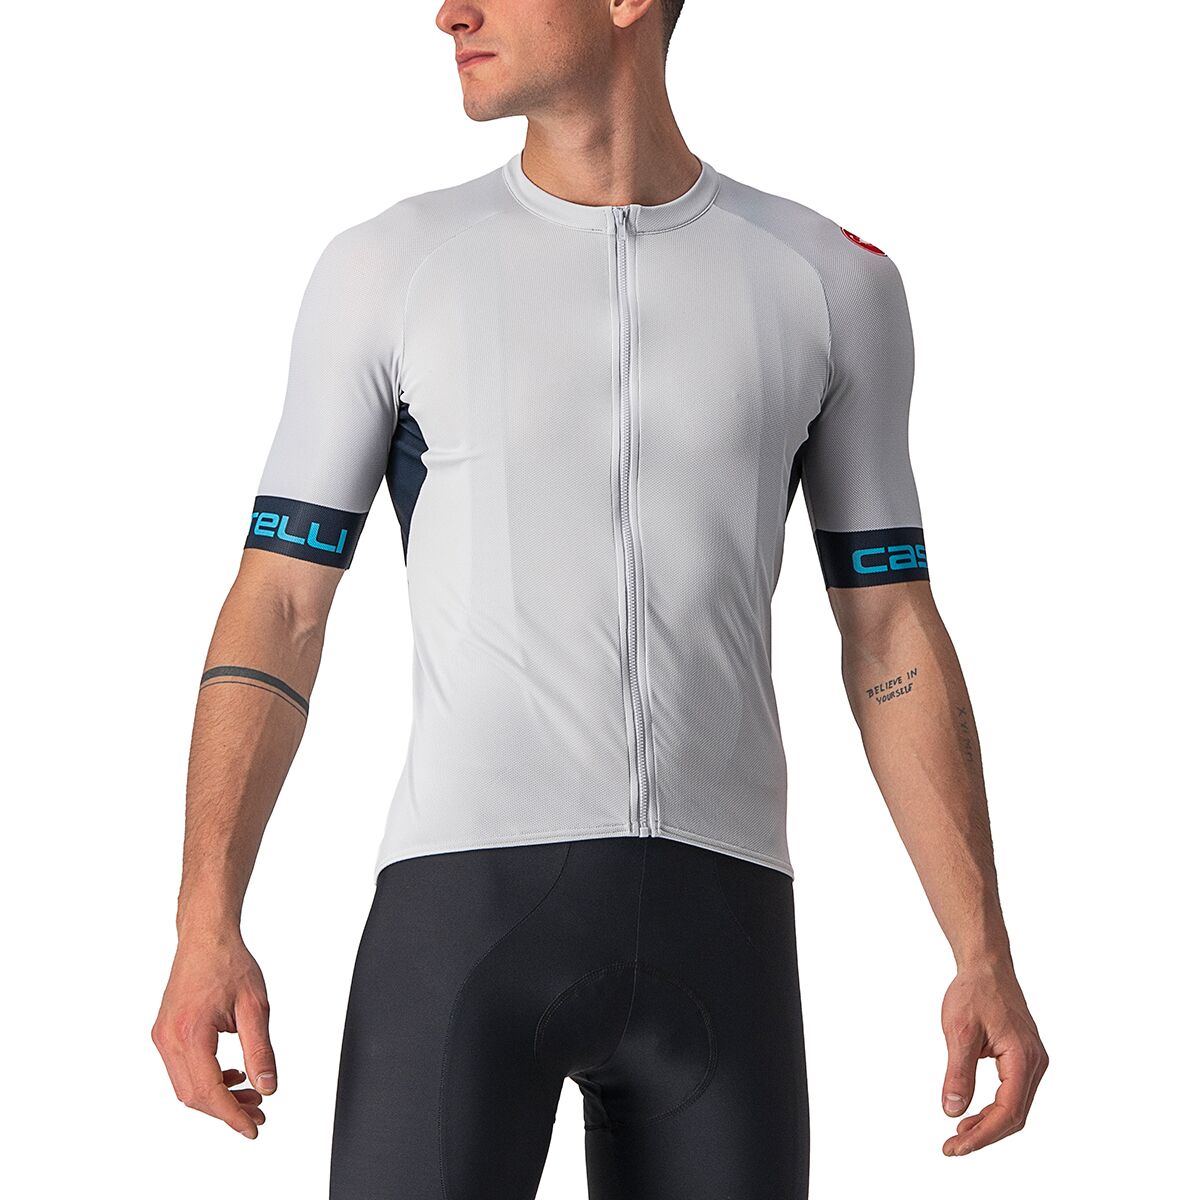 Cycling Jerseys for Men - Cycling Shirts